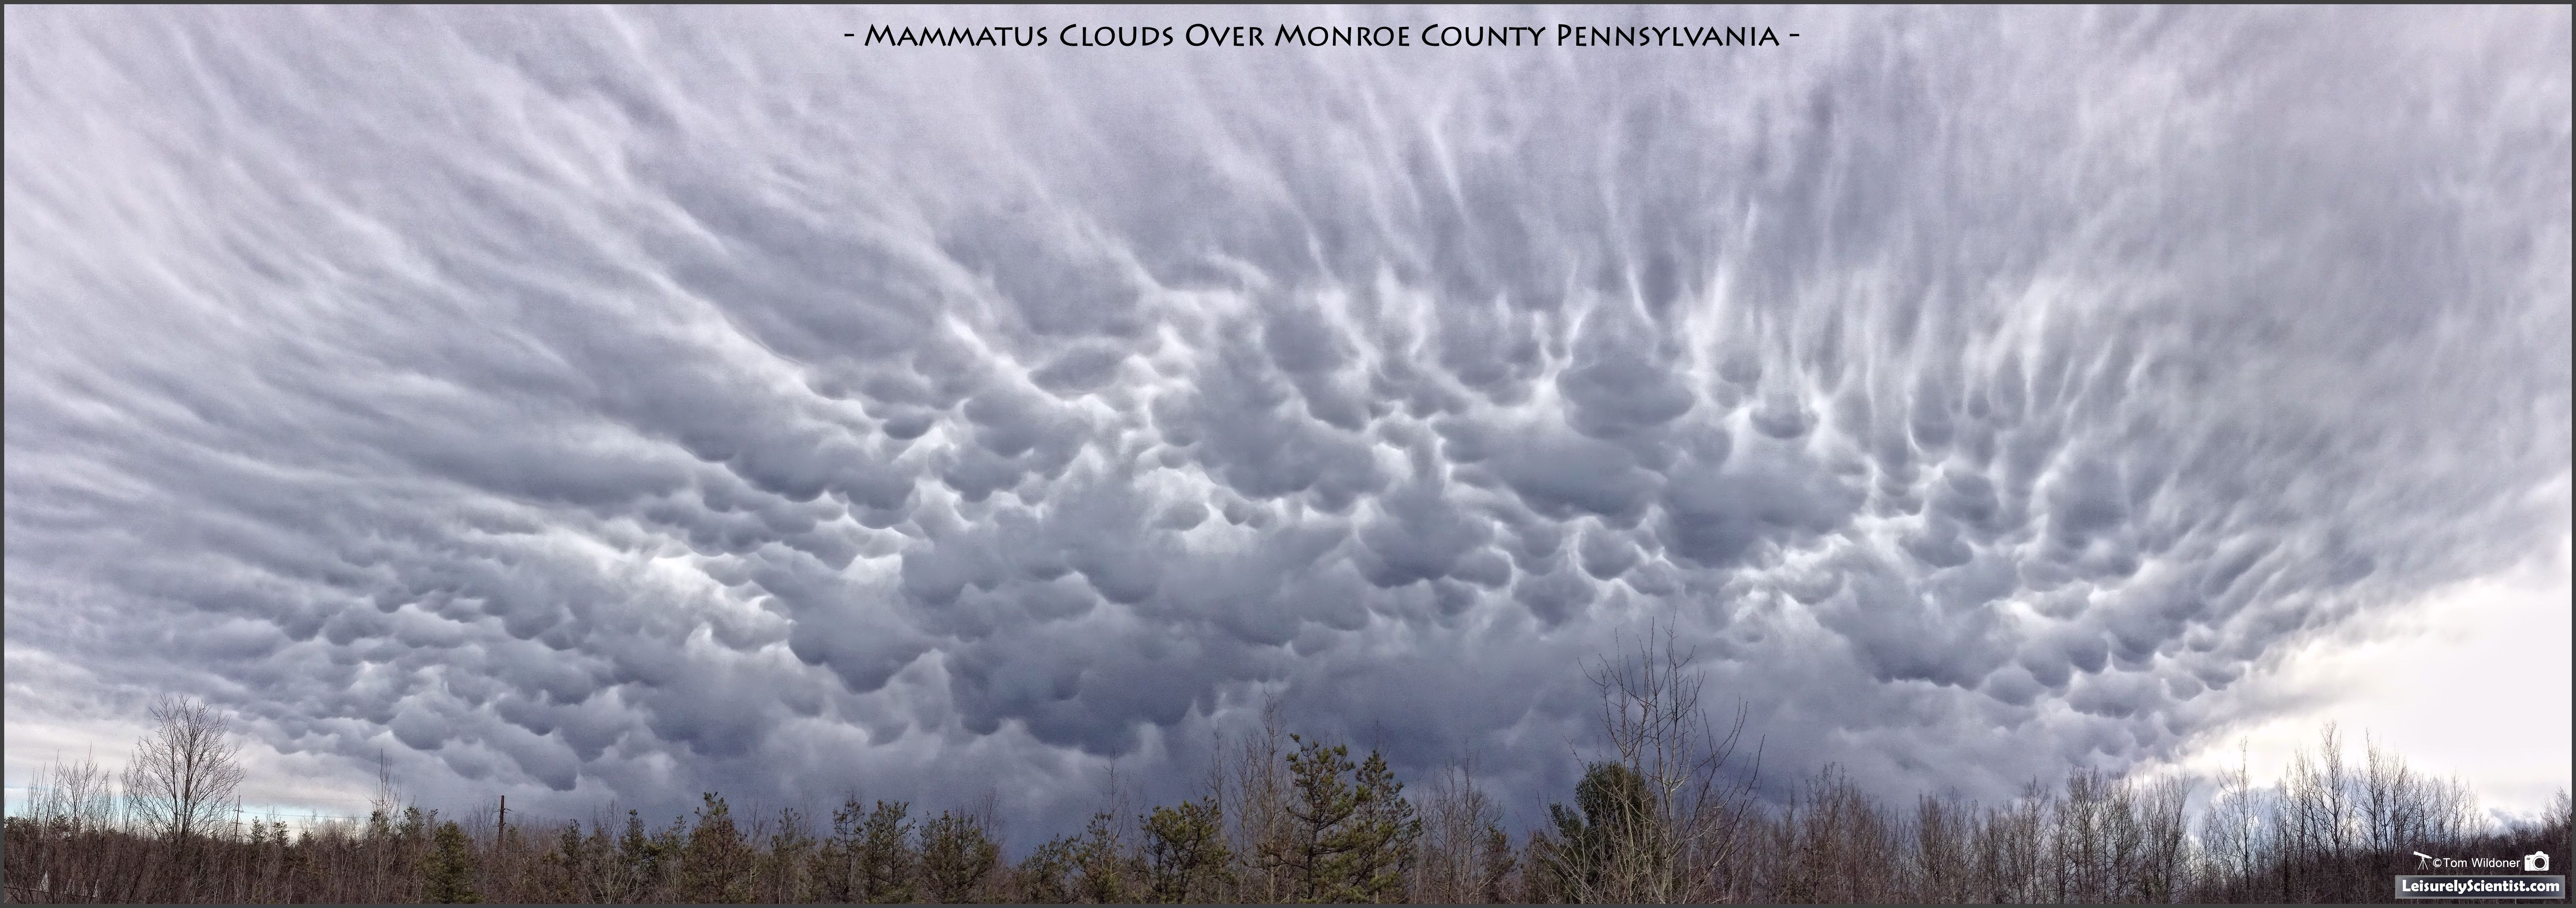 Mammatus clouds photo